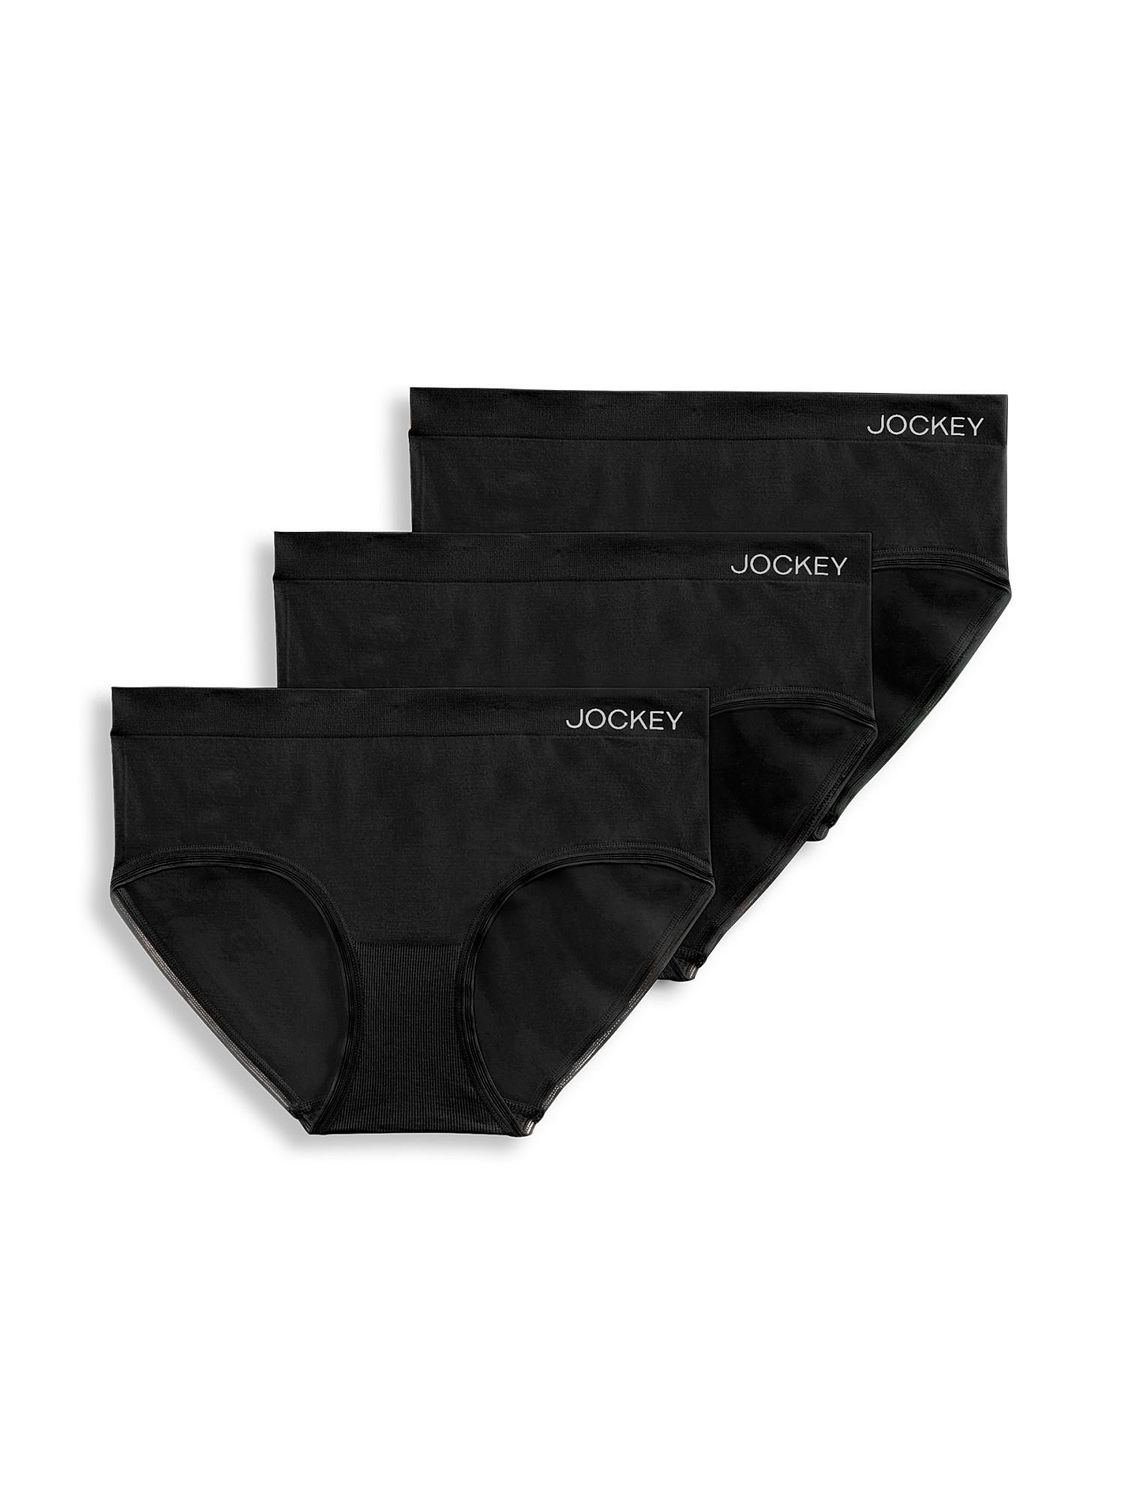 Jockey Women's Underwear Smooth & Shine Seamfree Hi Cut, Black, 4